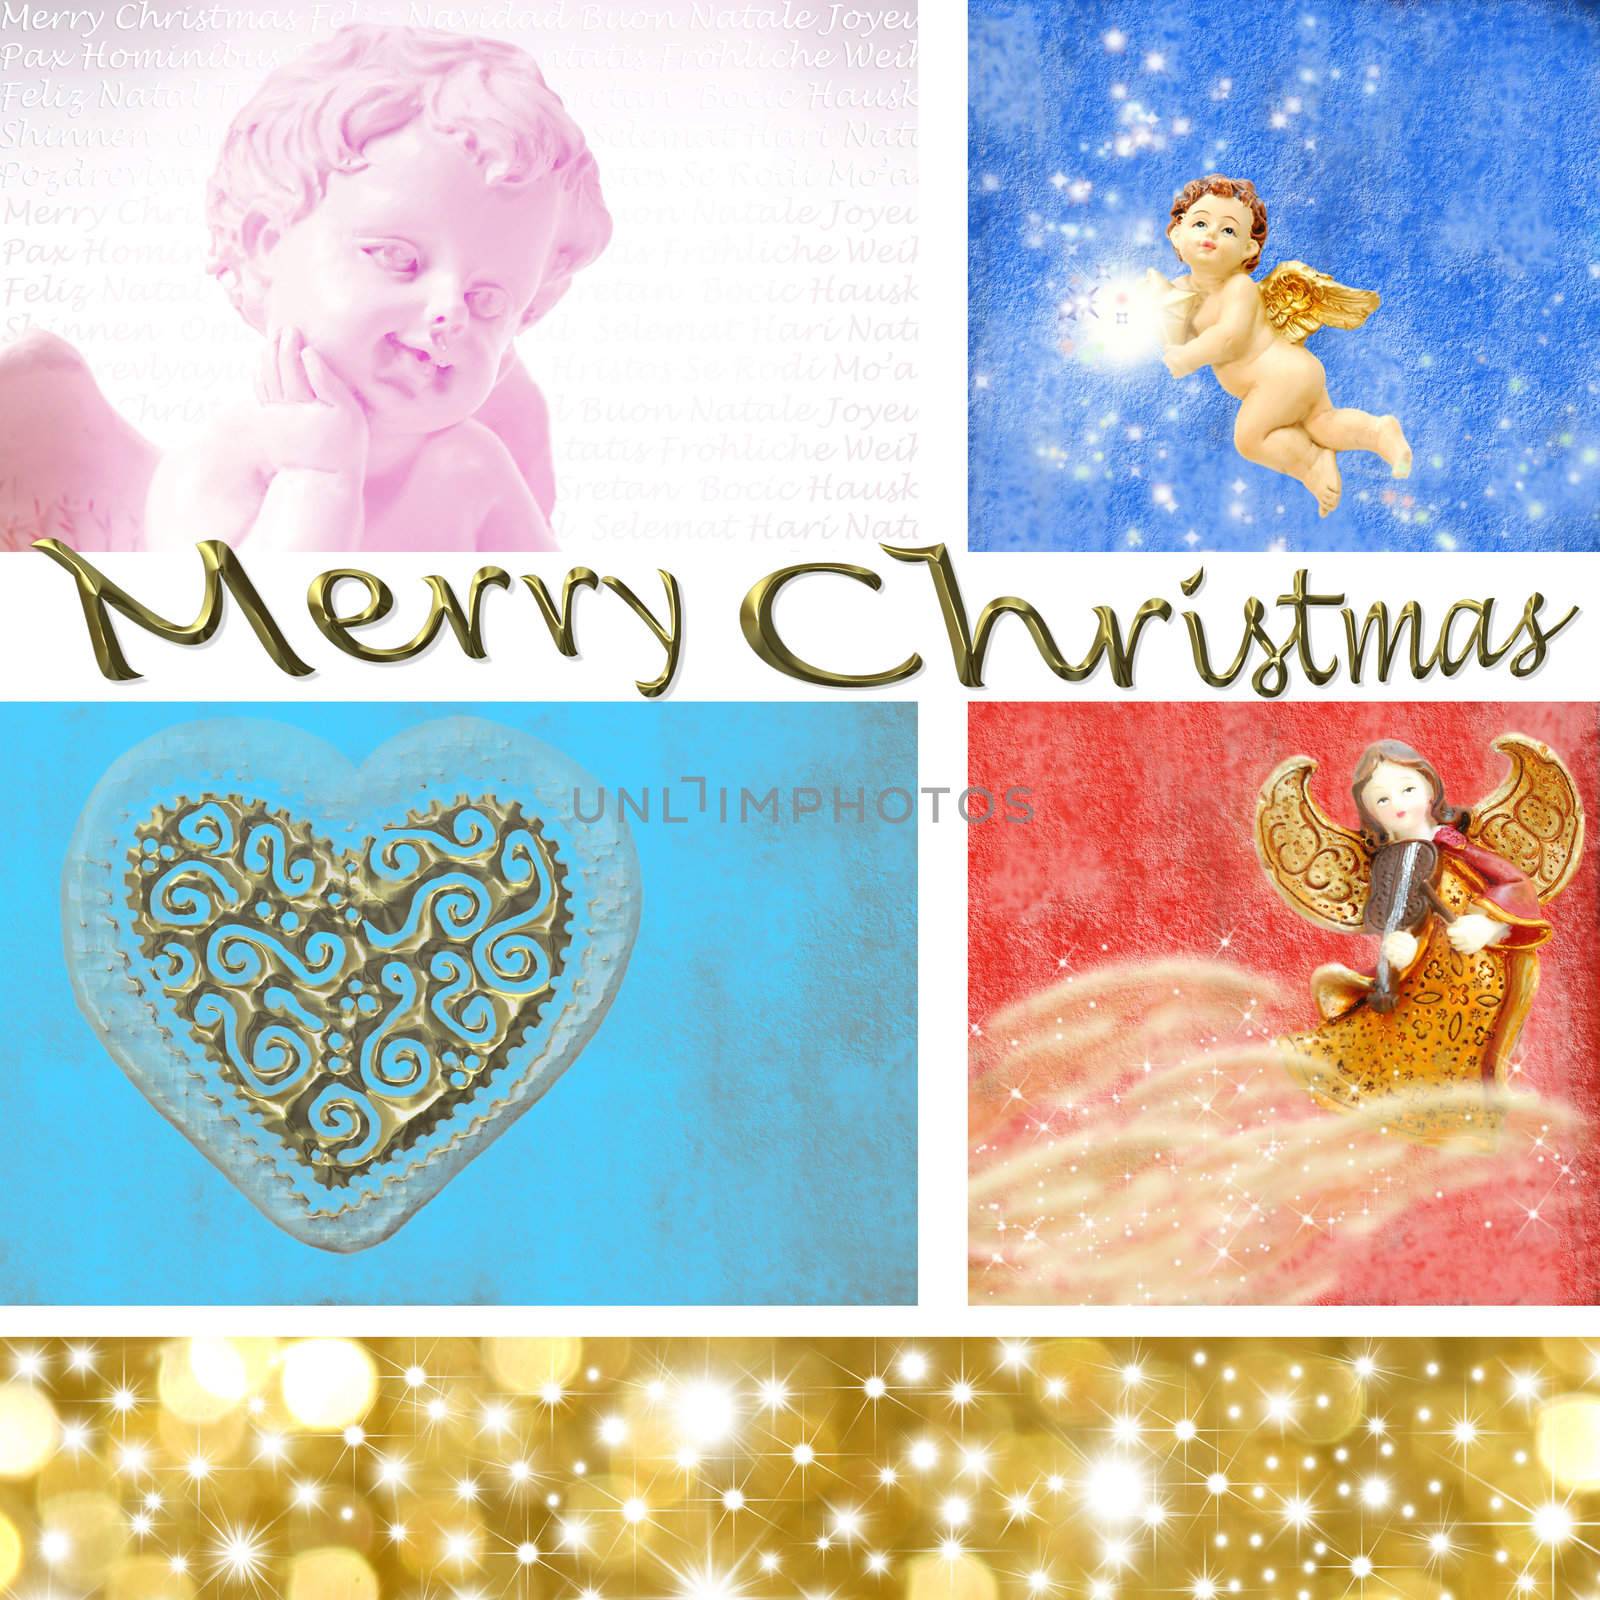 Christmas Cards Christmas image composition